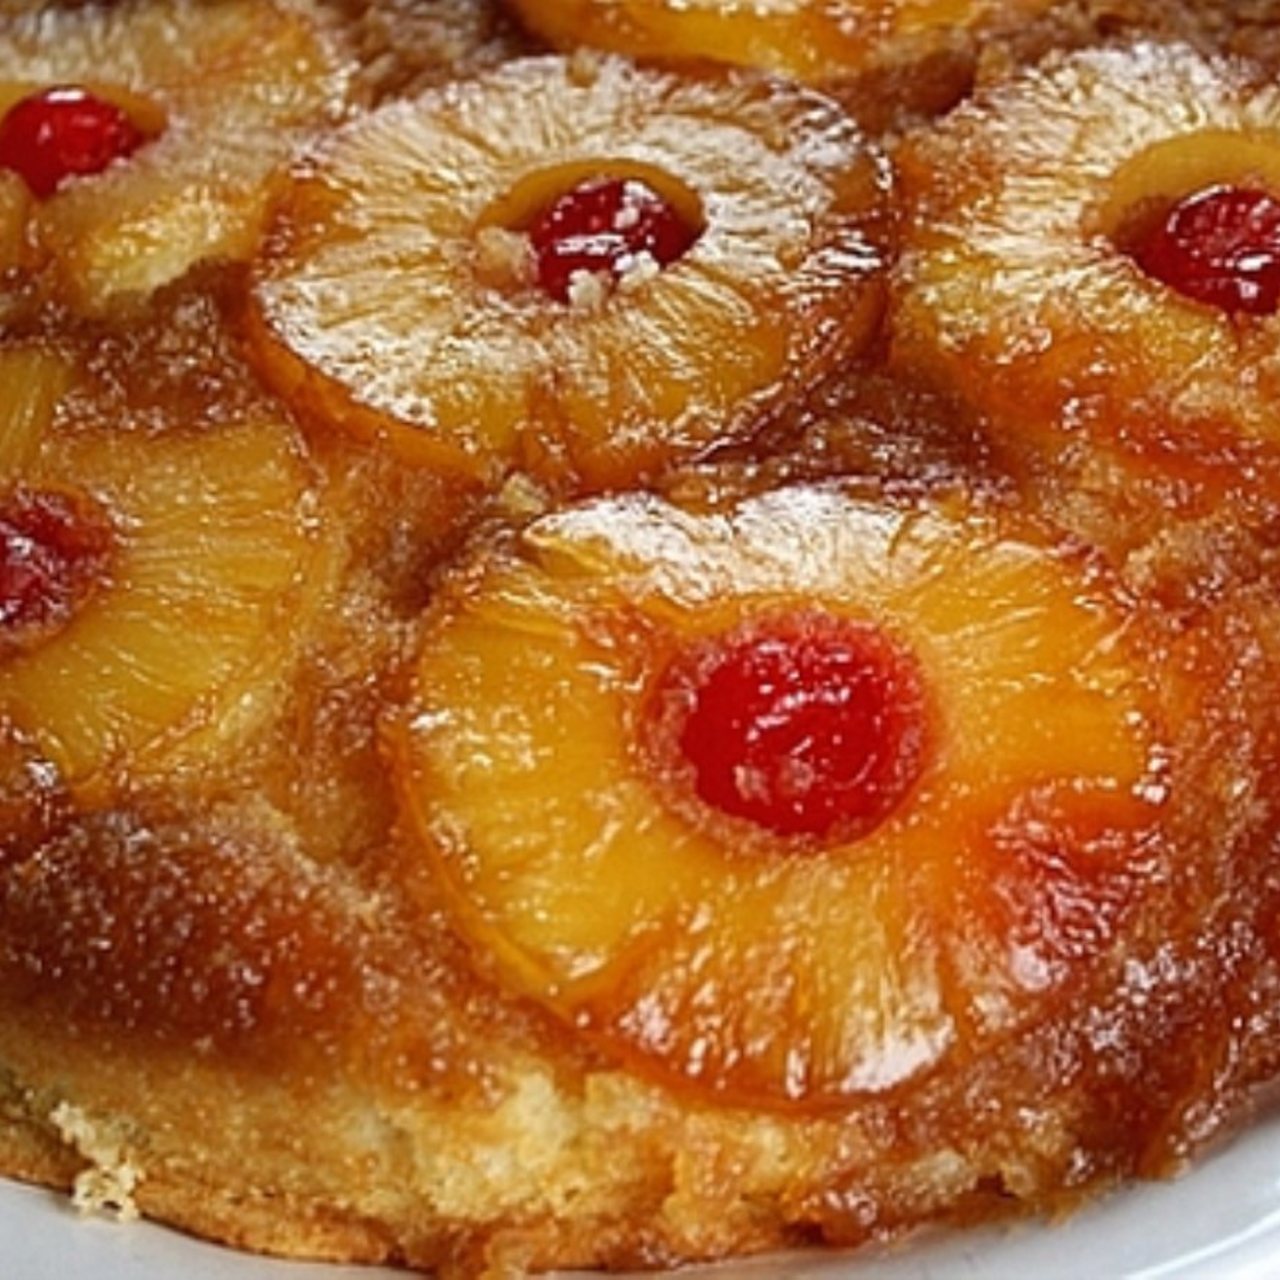 https://bigoven-res.cloudinary.com/image/upload/t_recipe-1280/pineapple-upside-down-cake-skillet-2.jpg